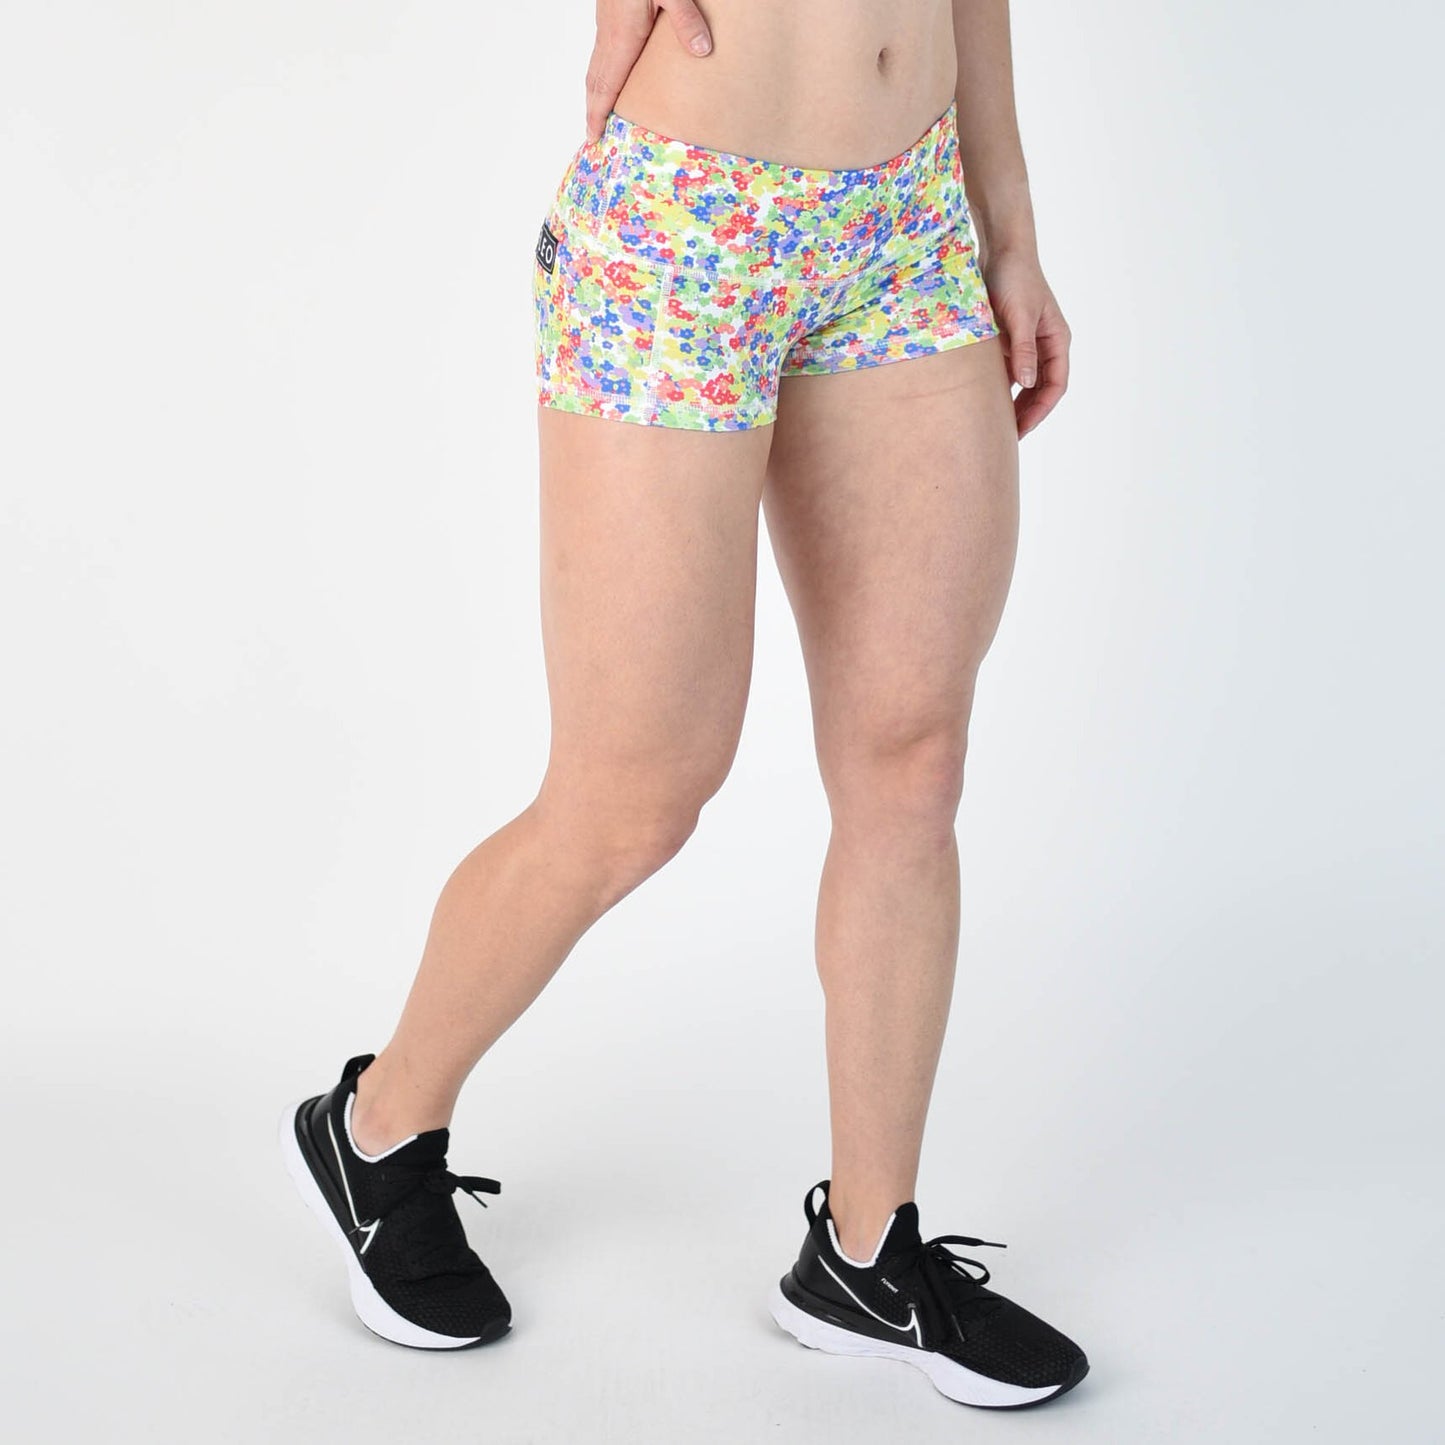 FLEO Neon Green Mini Shorts (Low-rise Contour) - 9 for 9